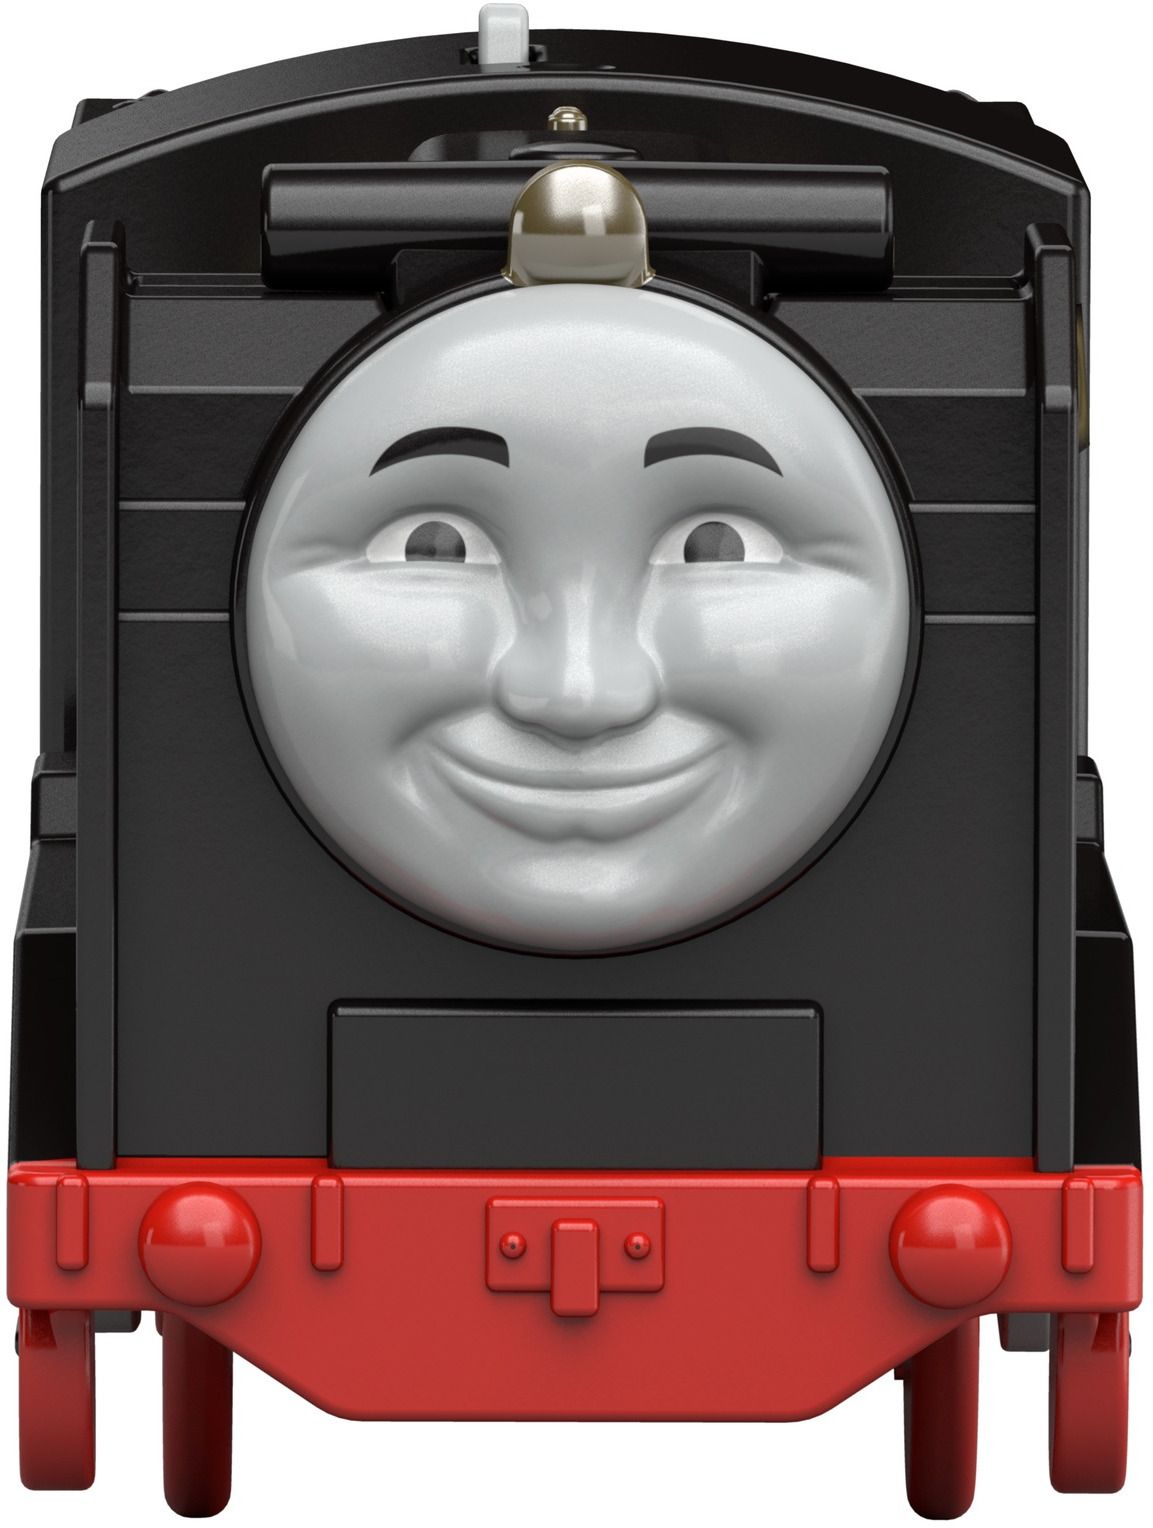 Thomas&Friends   